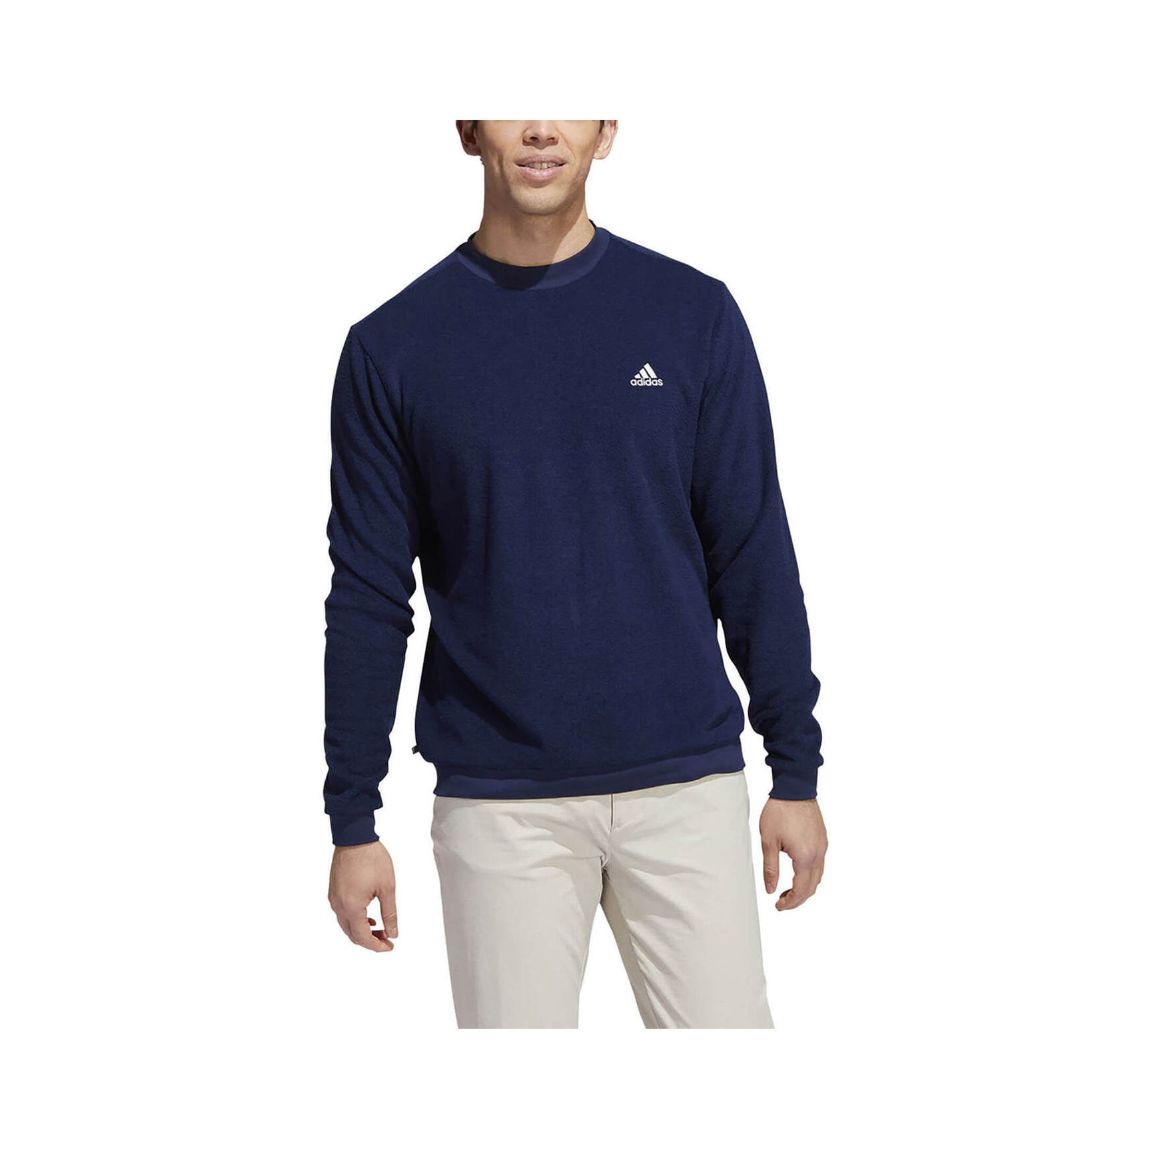 Adidas Golf Men's Core Crewneck Sweatshirt